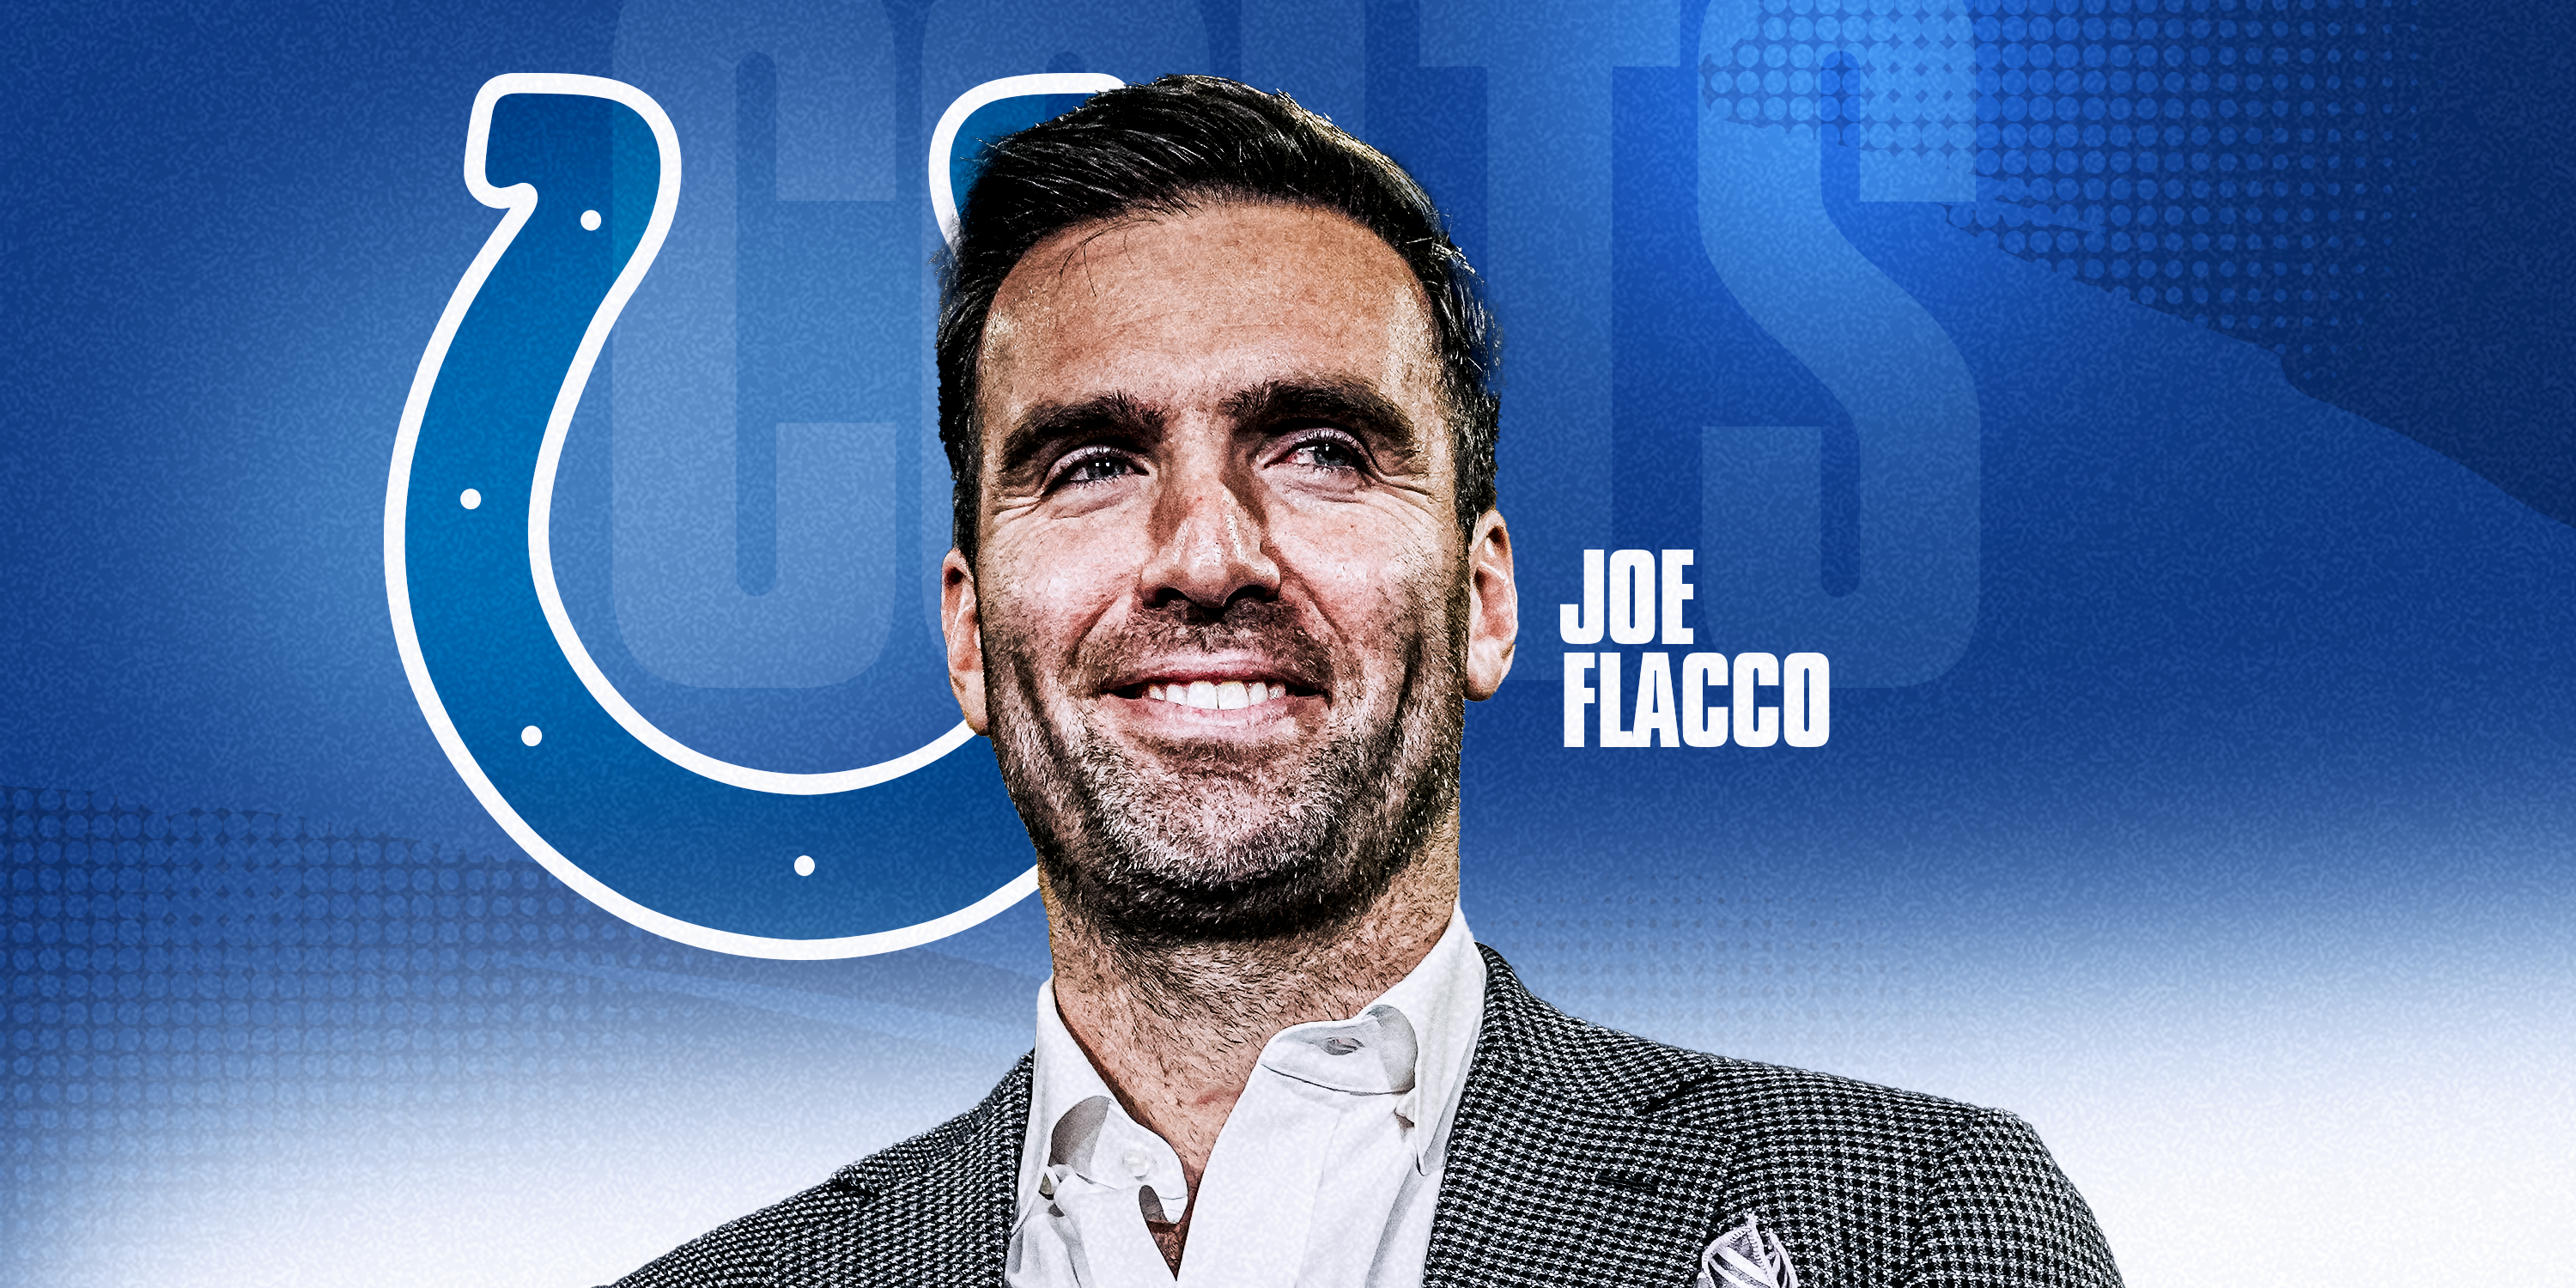 Joe Flacco joins the Colts